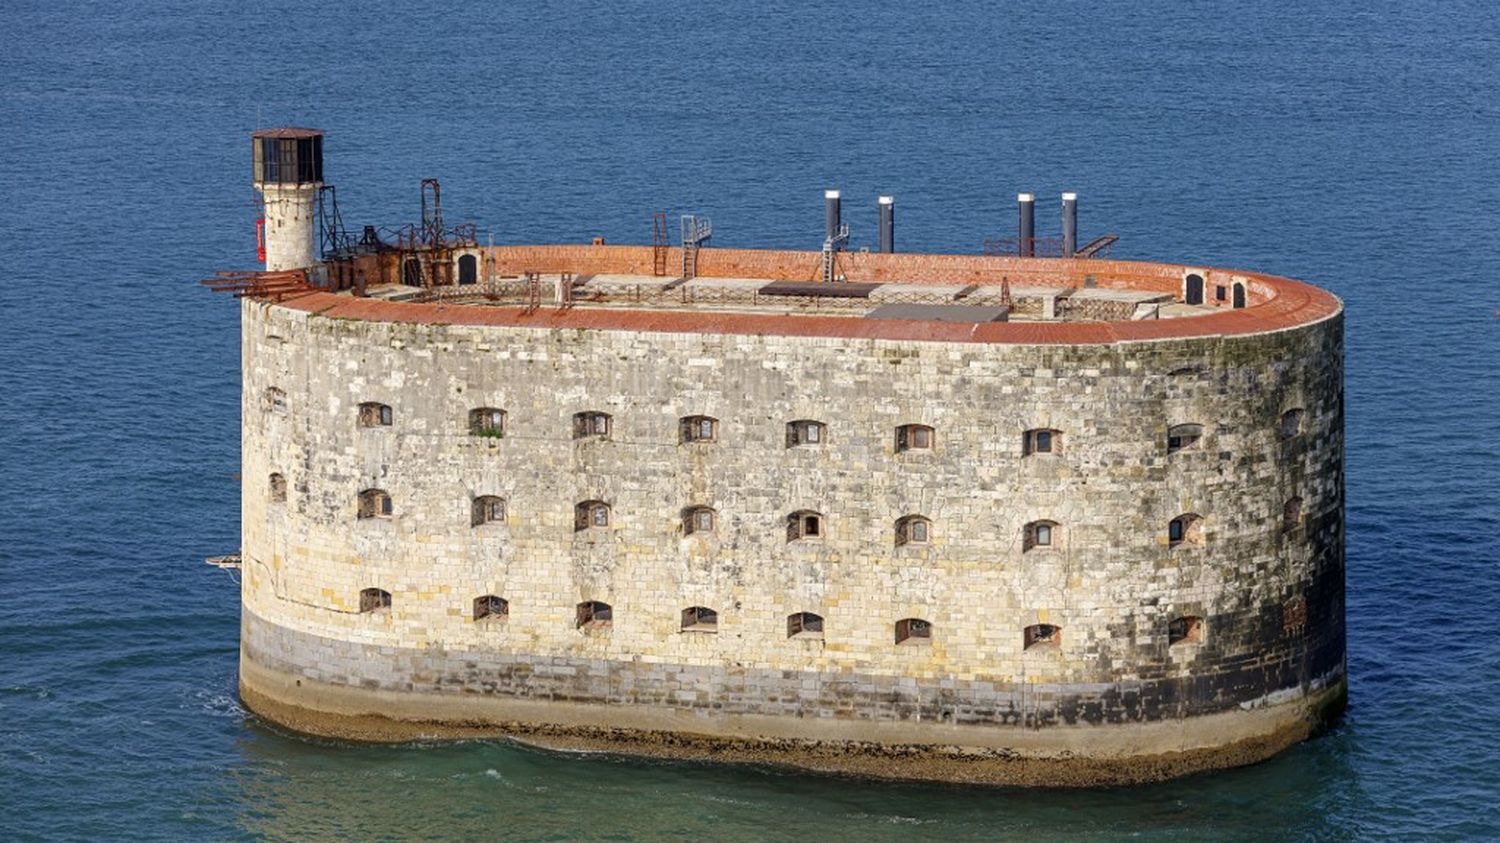 "Save Fort Boyard": public consultation before works costing 44 million euros